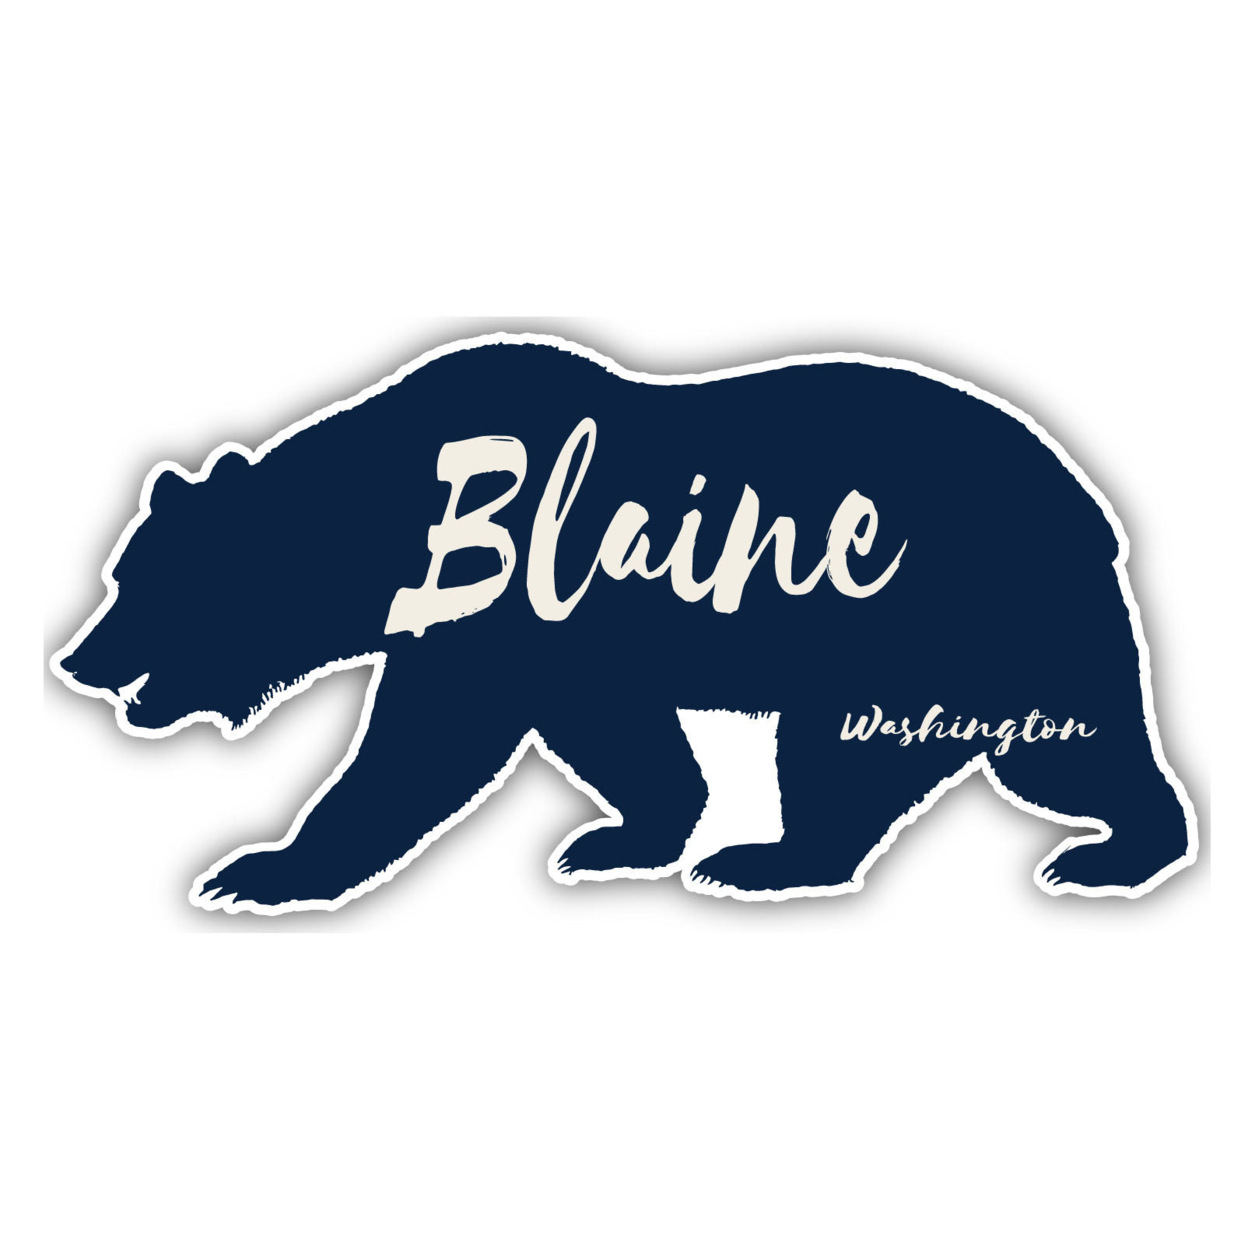 Blaine Washington Souvenir Decorative Stickers (Choose Theme And Size) - 4-Pack, 10-Inch, Bear